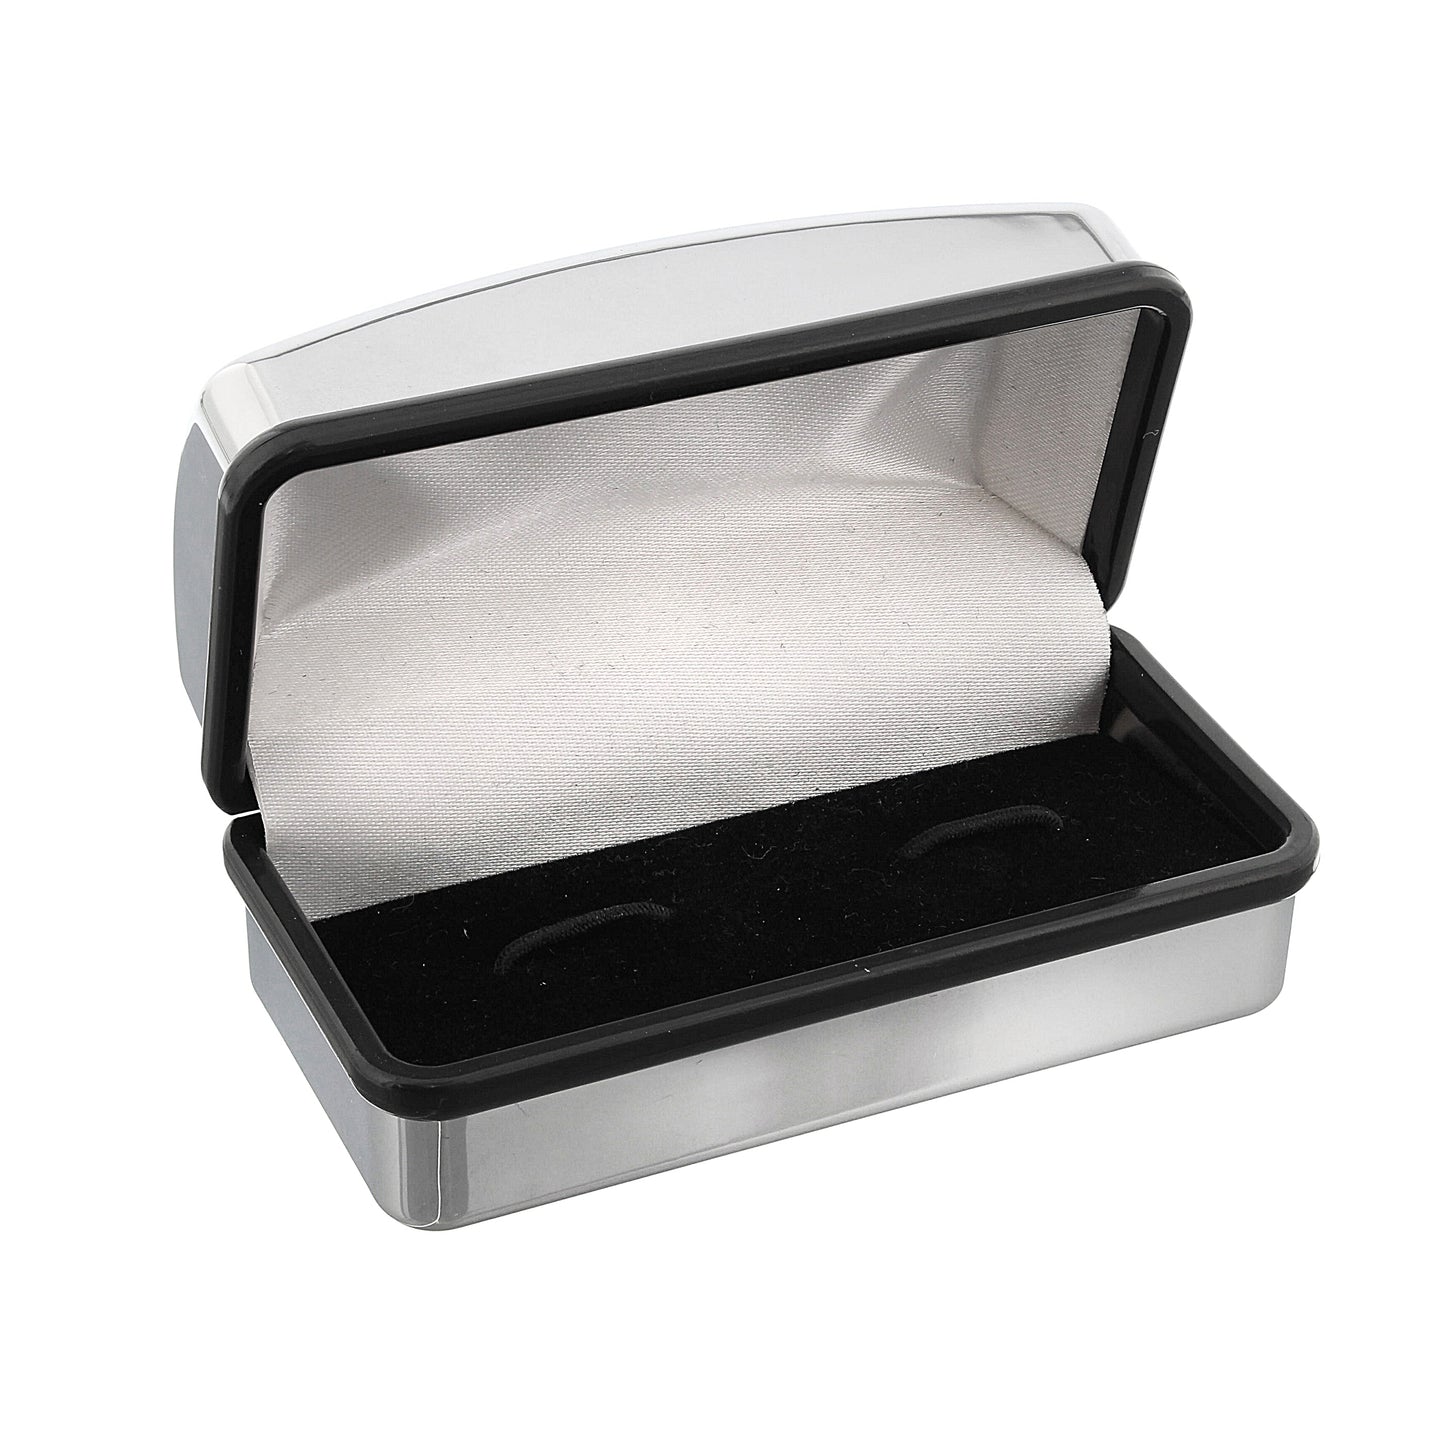 Personalised Decorative Wedding Groom Cufflink Box - Personalise It!